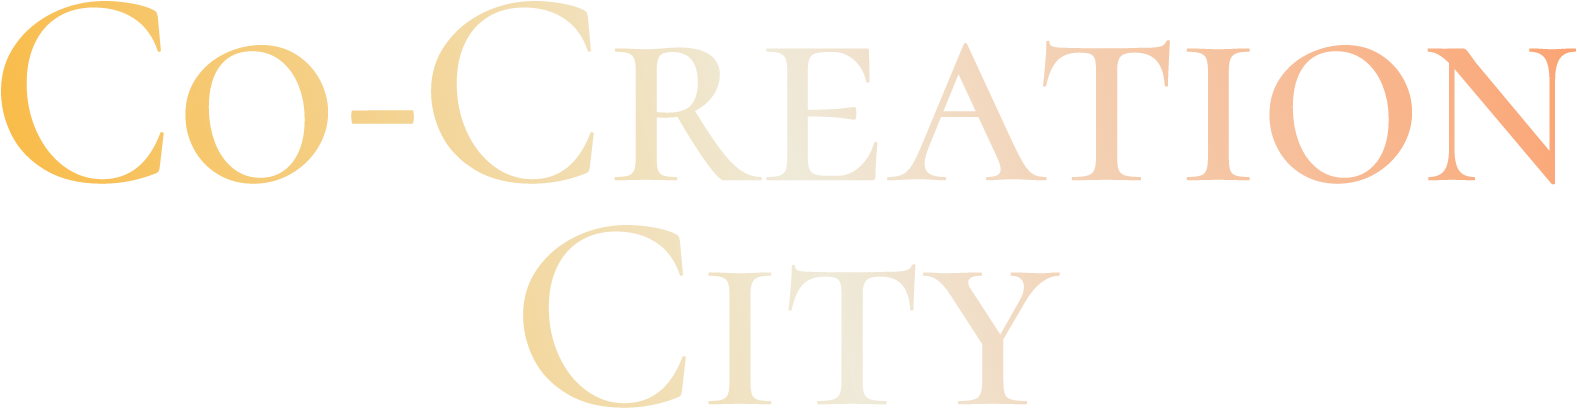 Co-CREATION CITY